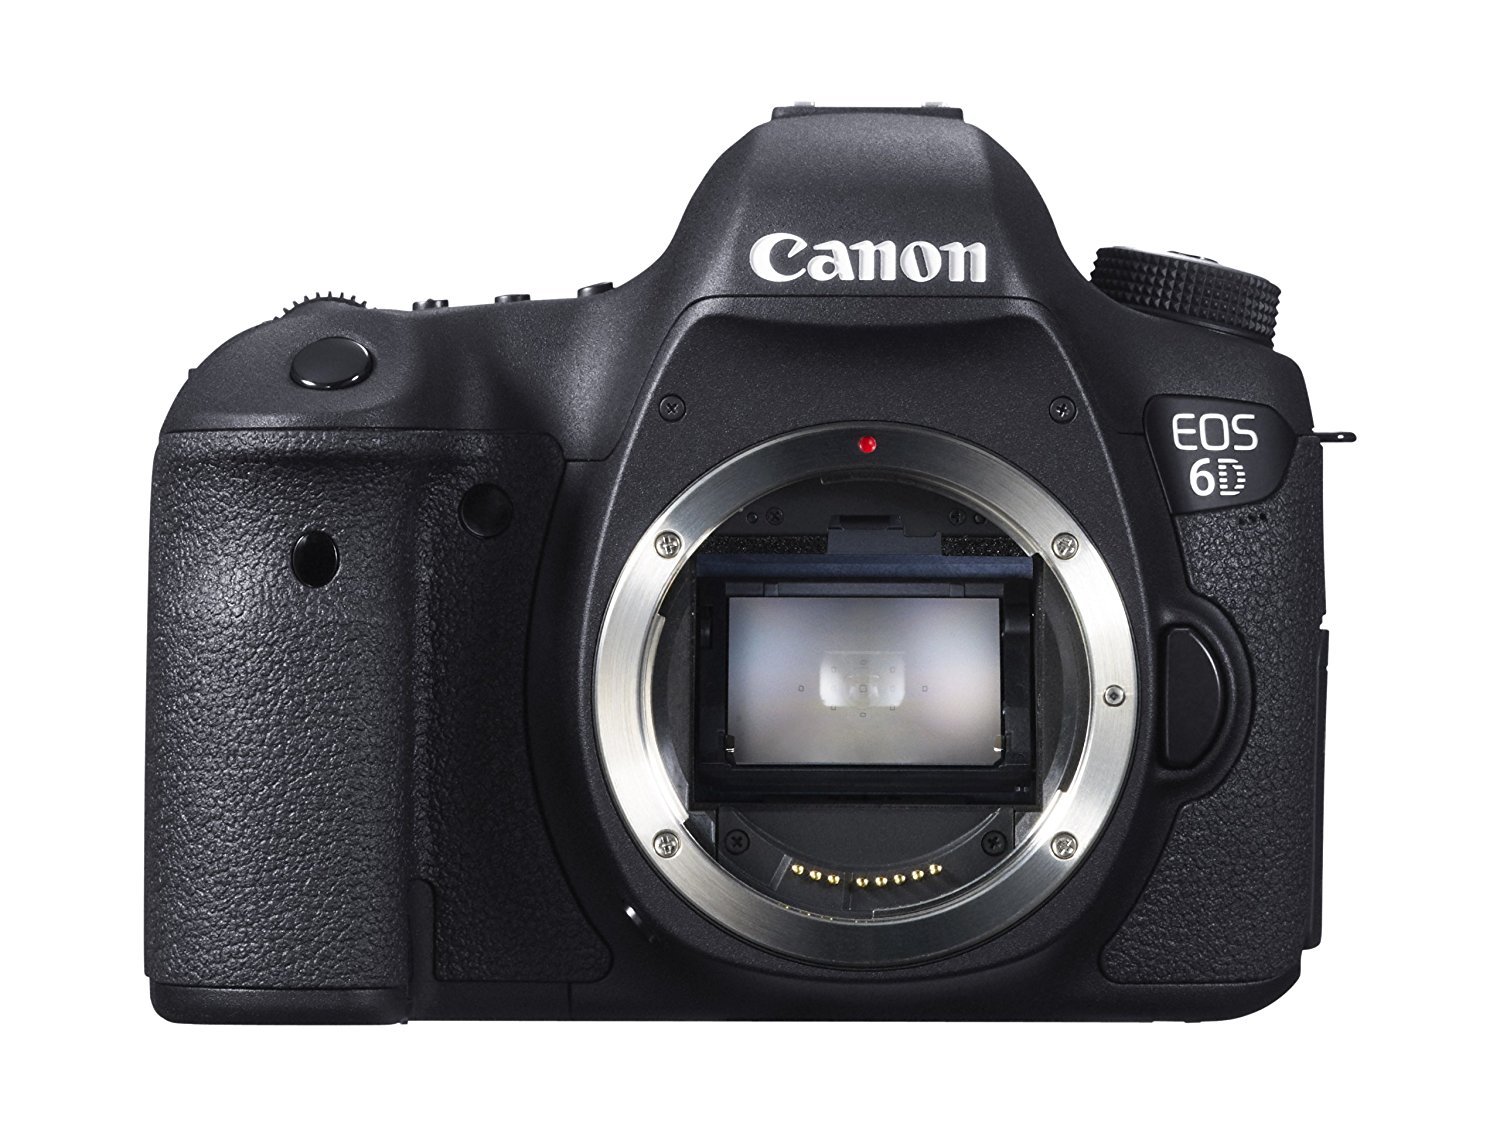 Canon كاميرا EOS 6D بدقة 20.2 ميجابكسل CMOS SLR رقمية م...